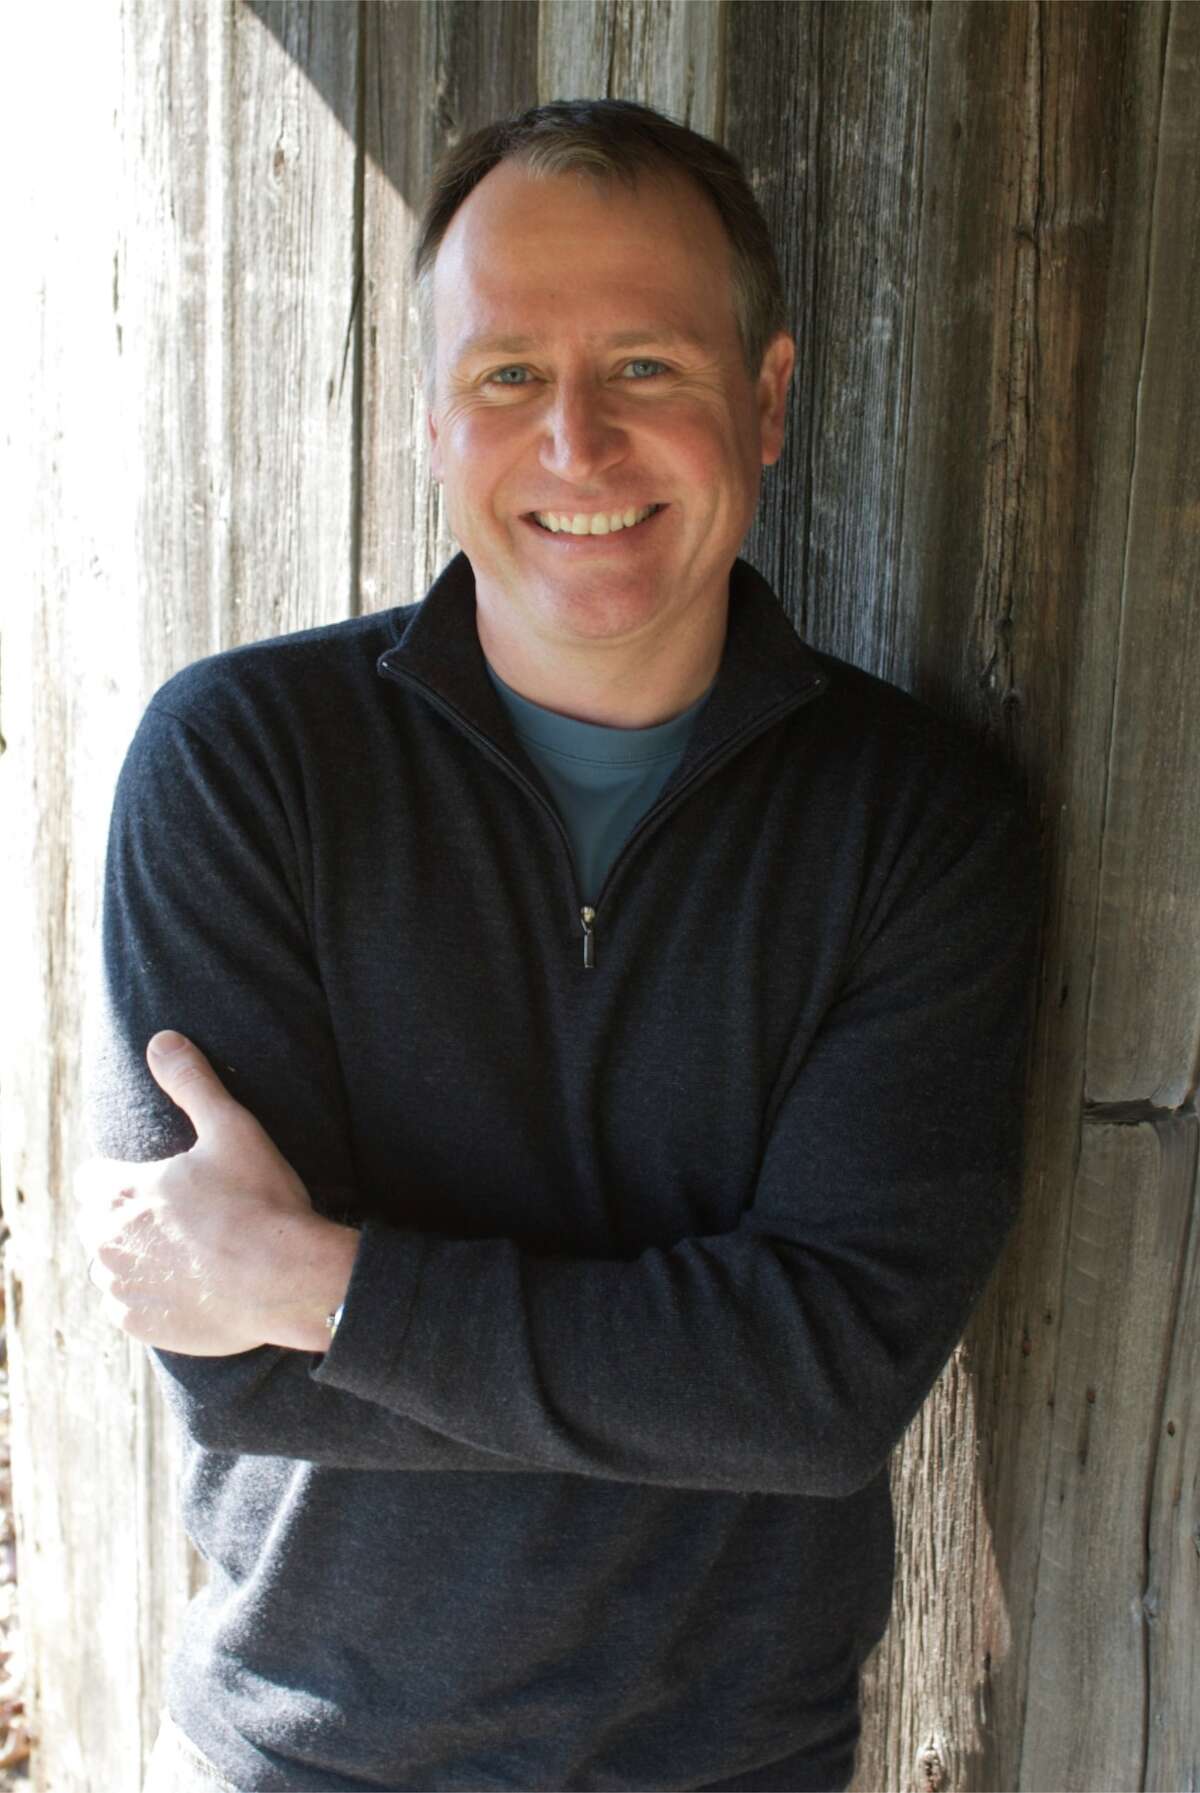 Author Paul Doiron